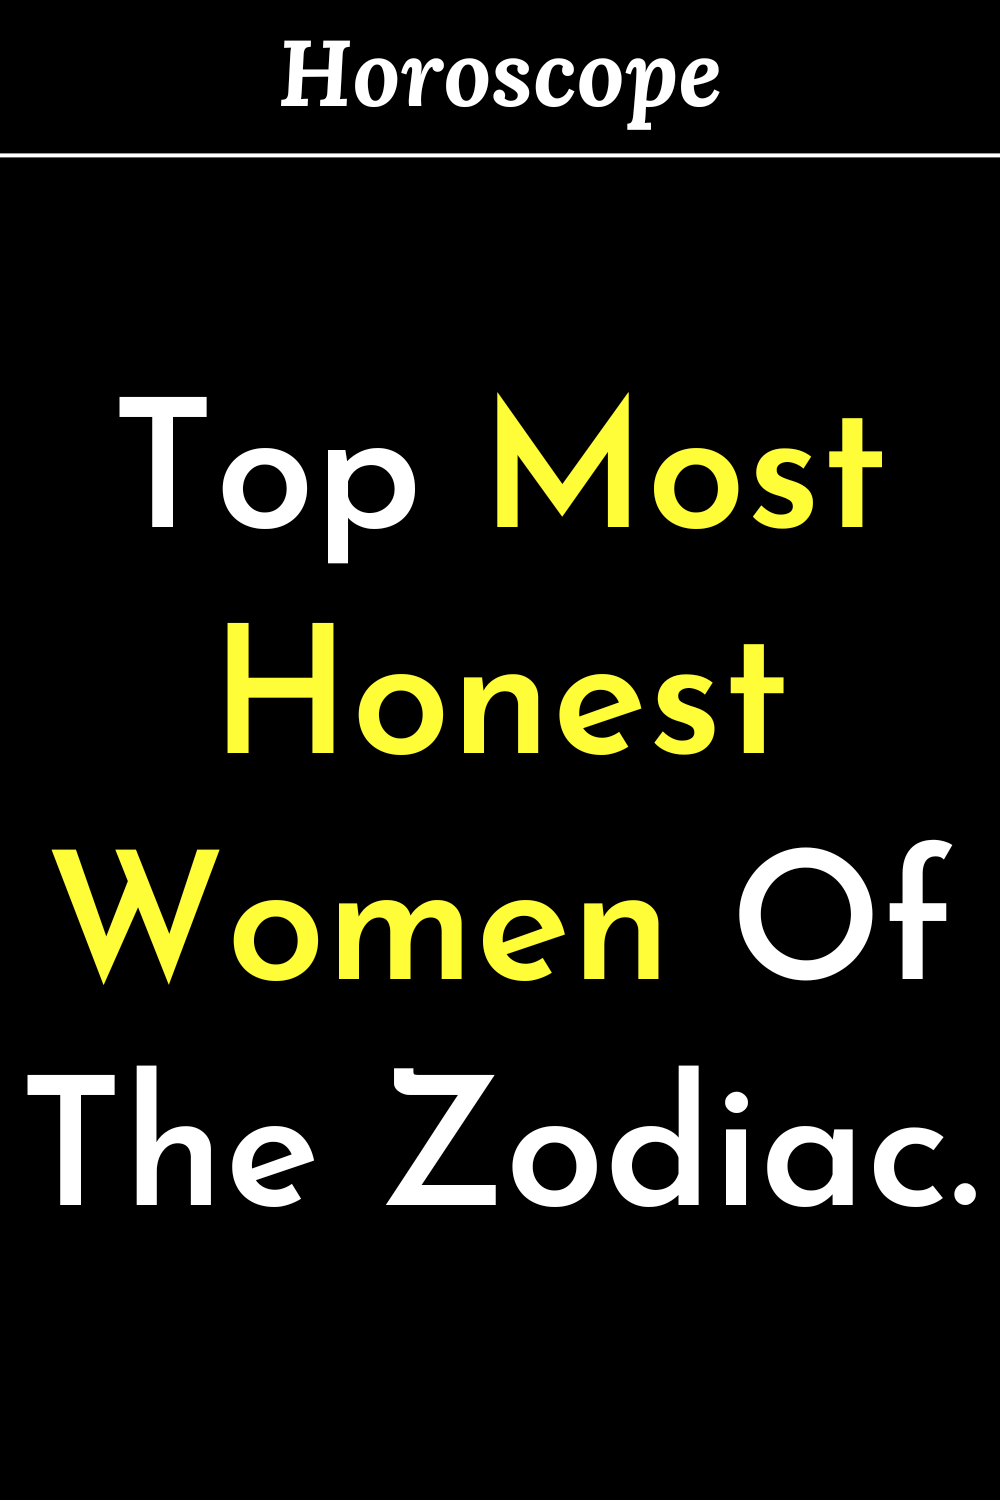 Top Most Honest Women Of The Zodiac.